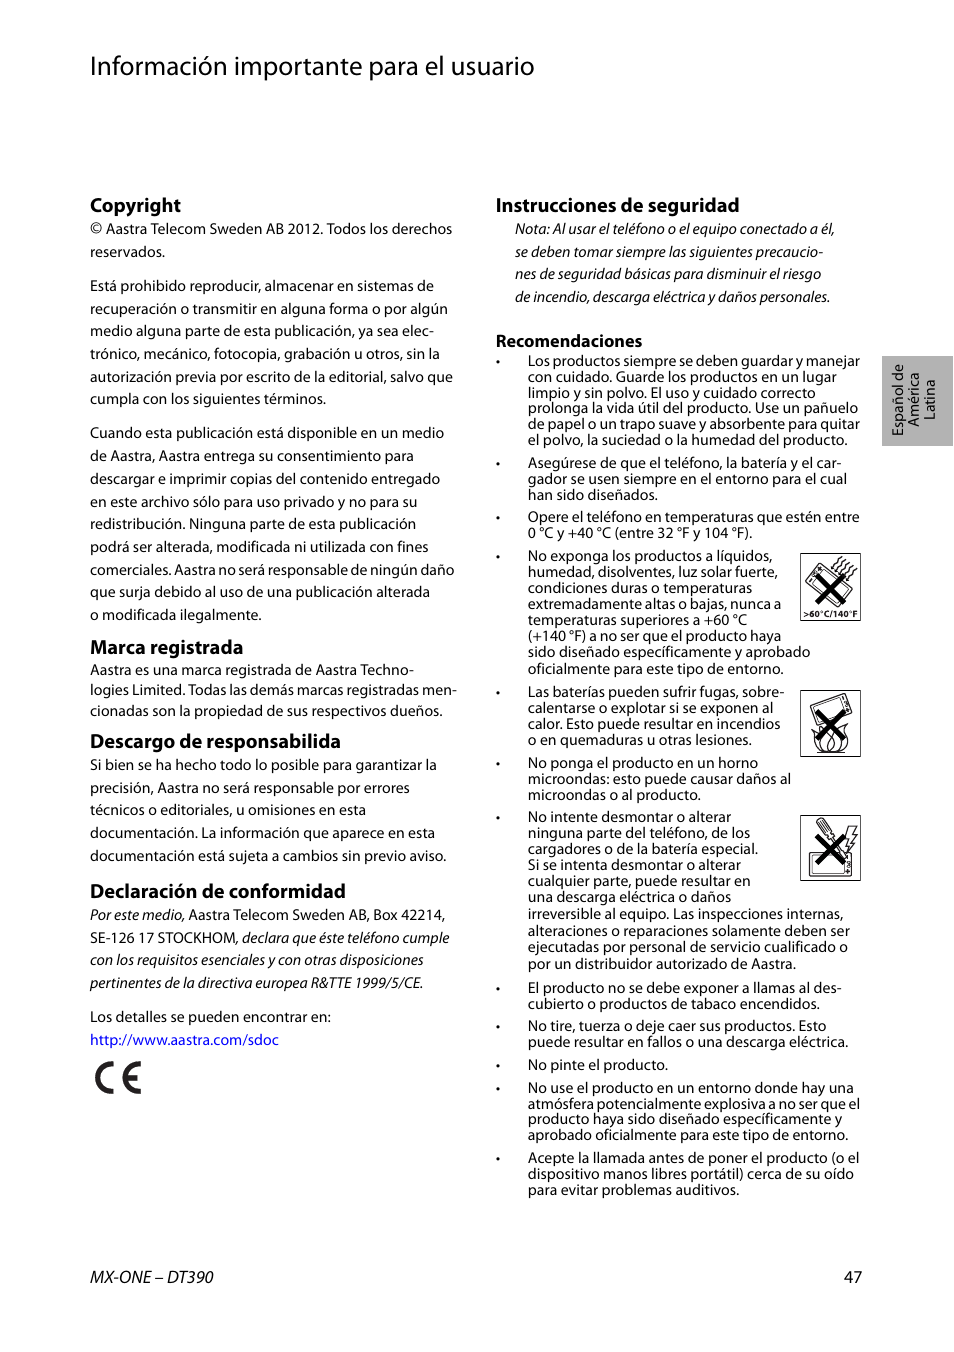 Español de américa latina, Información importante para el usuario,  Copyright | AASTRA DT390 for MX-ONE Quick Reference Guide User Manual |  Page 47 / 148 | Original mode